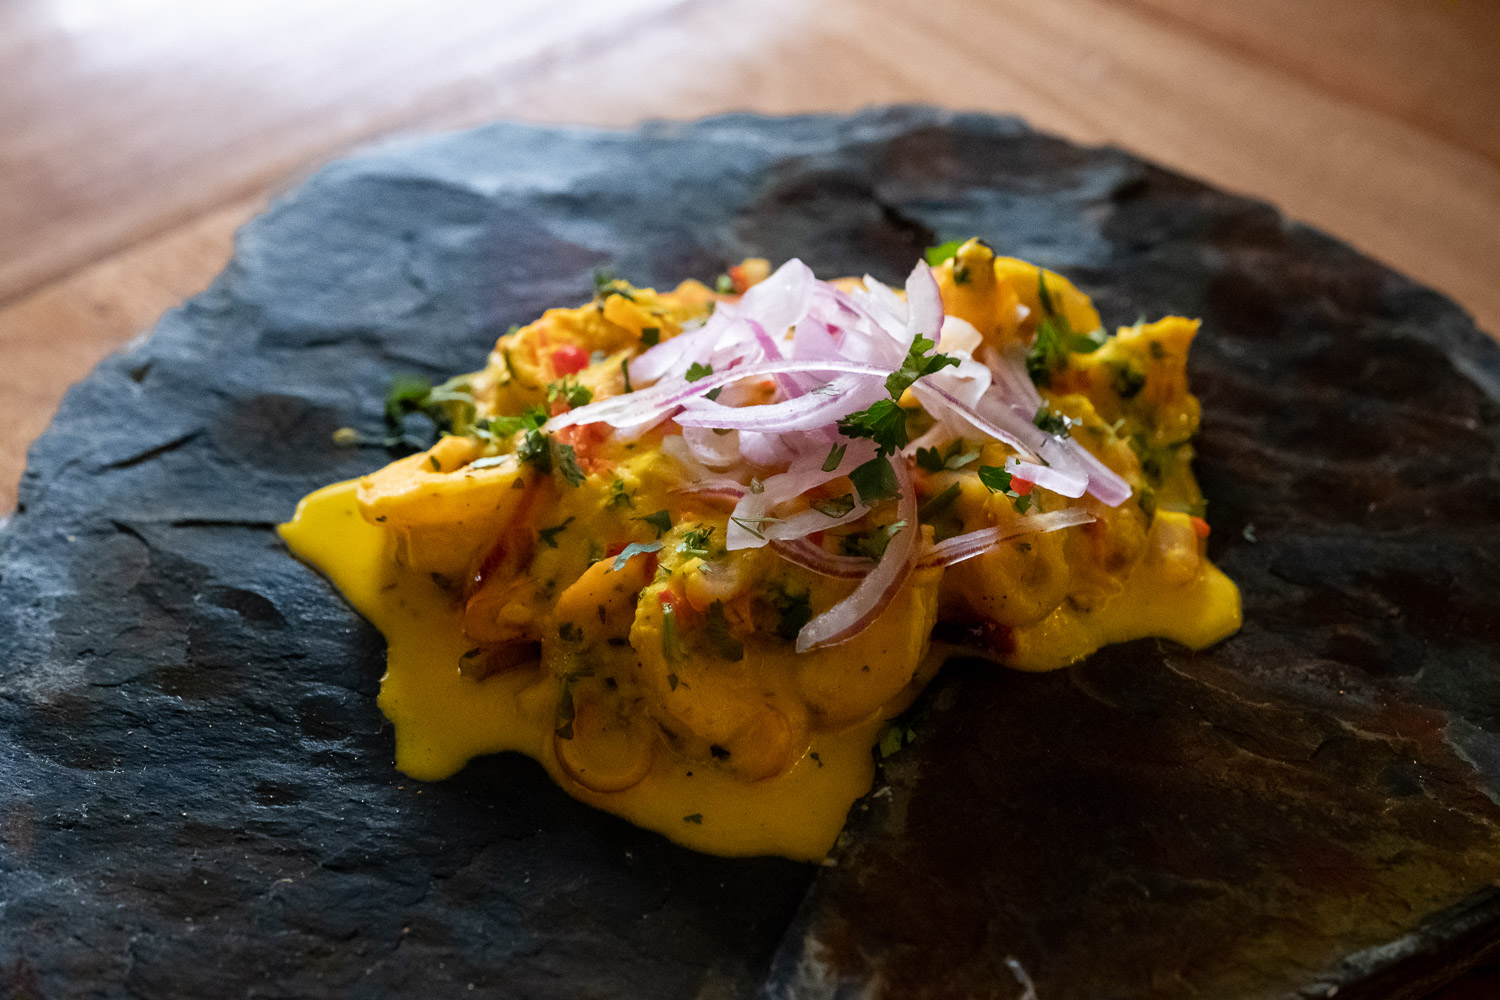 Kampu, an Asian-Peruvian restaurant in The Sacred Valley, Peru. Travel photography and guide by © Natasha Lequepeys for "And Then I Met Yoko". #travelguide #photoblog #fujifilm #foodie #ValleSagrado